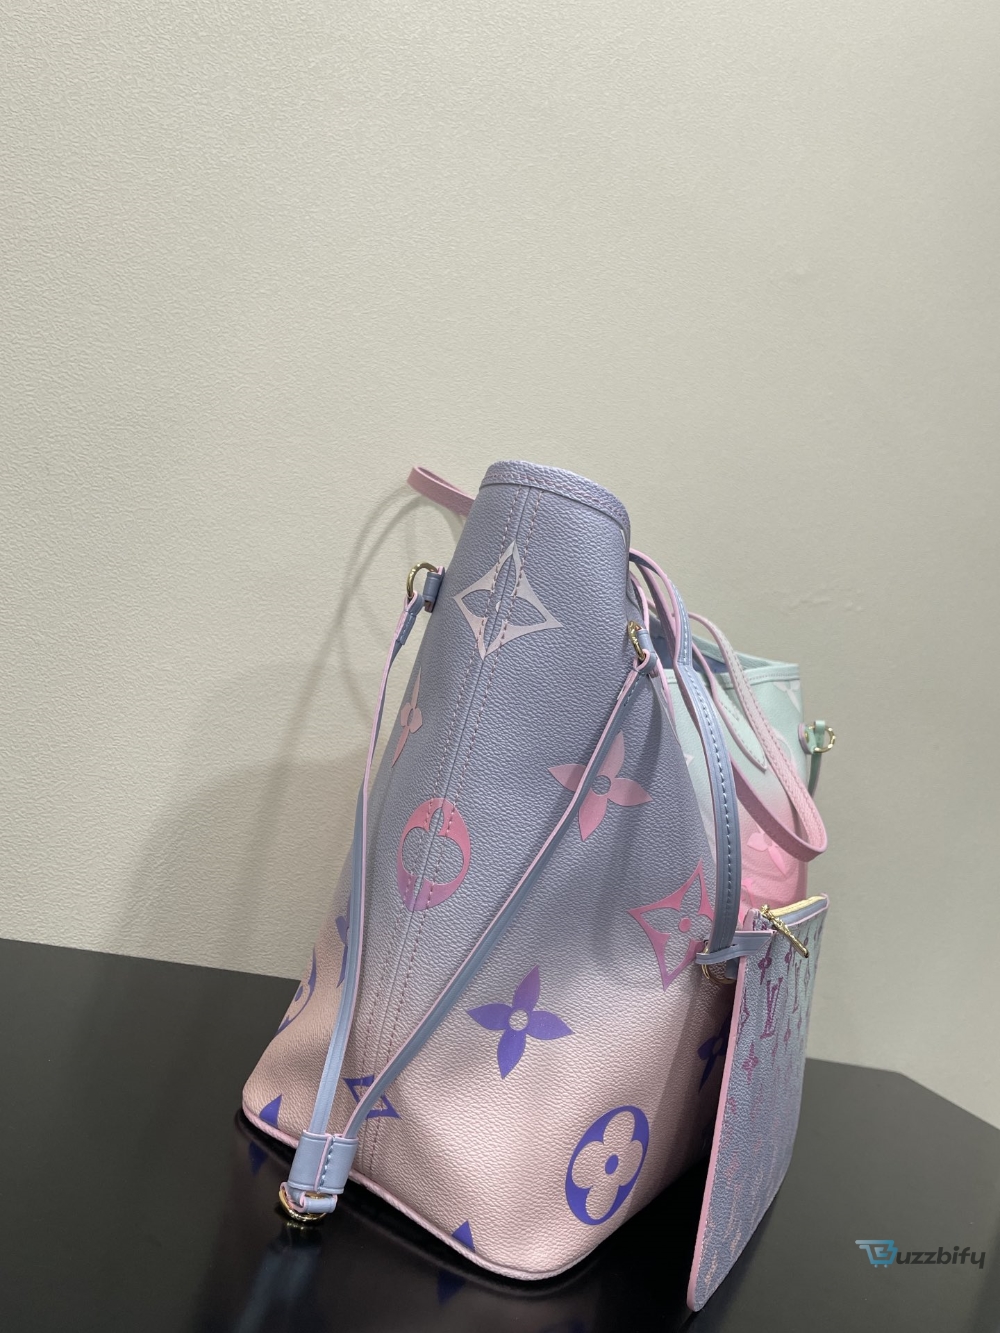 louis vuitton neverfull mm tote bag monogram canvas sunrise pastel for women womens handbags shoulder bags 122in31cm lv m46077 2799 buzzbify 1 9